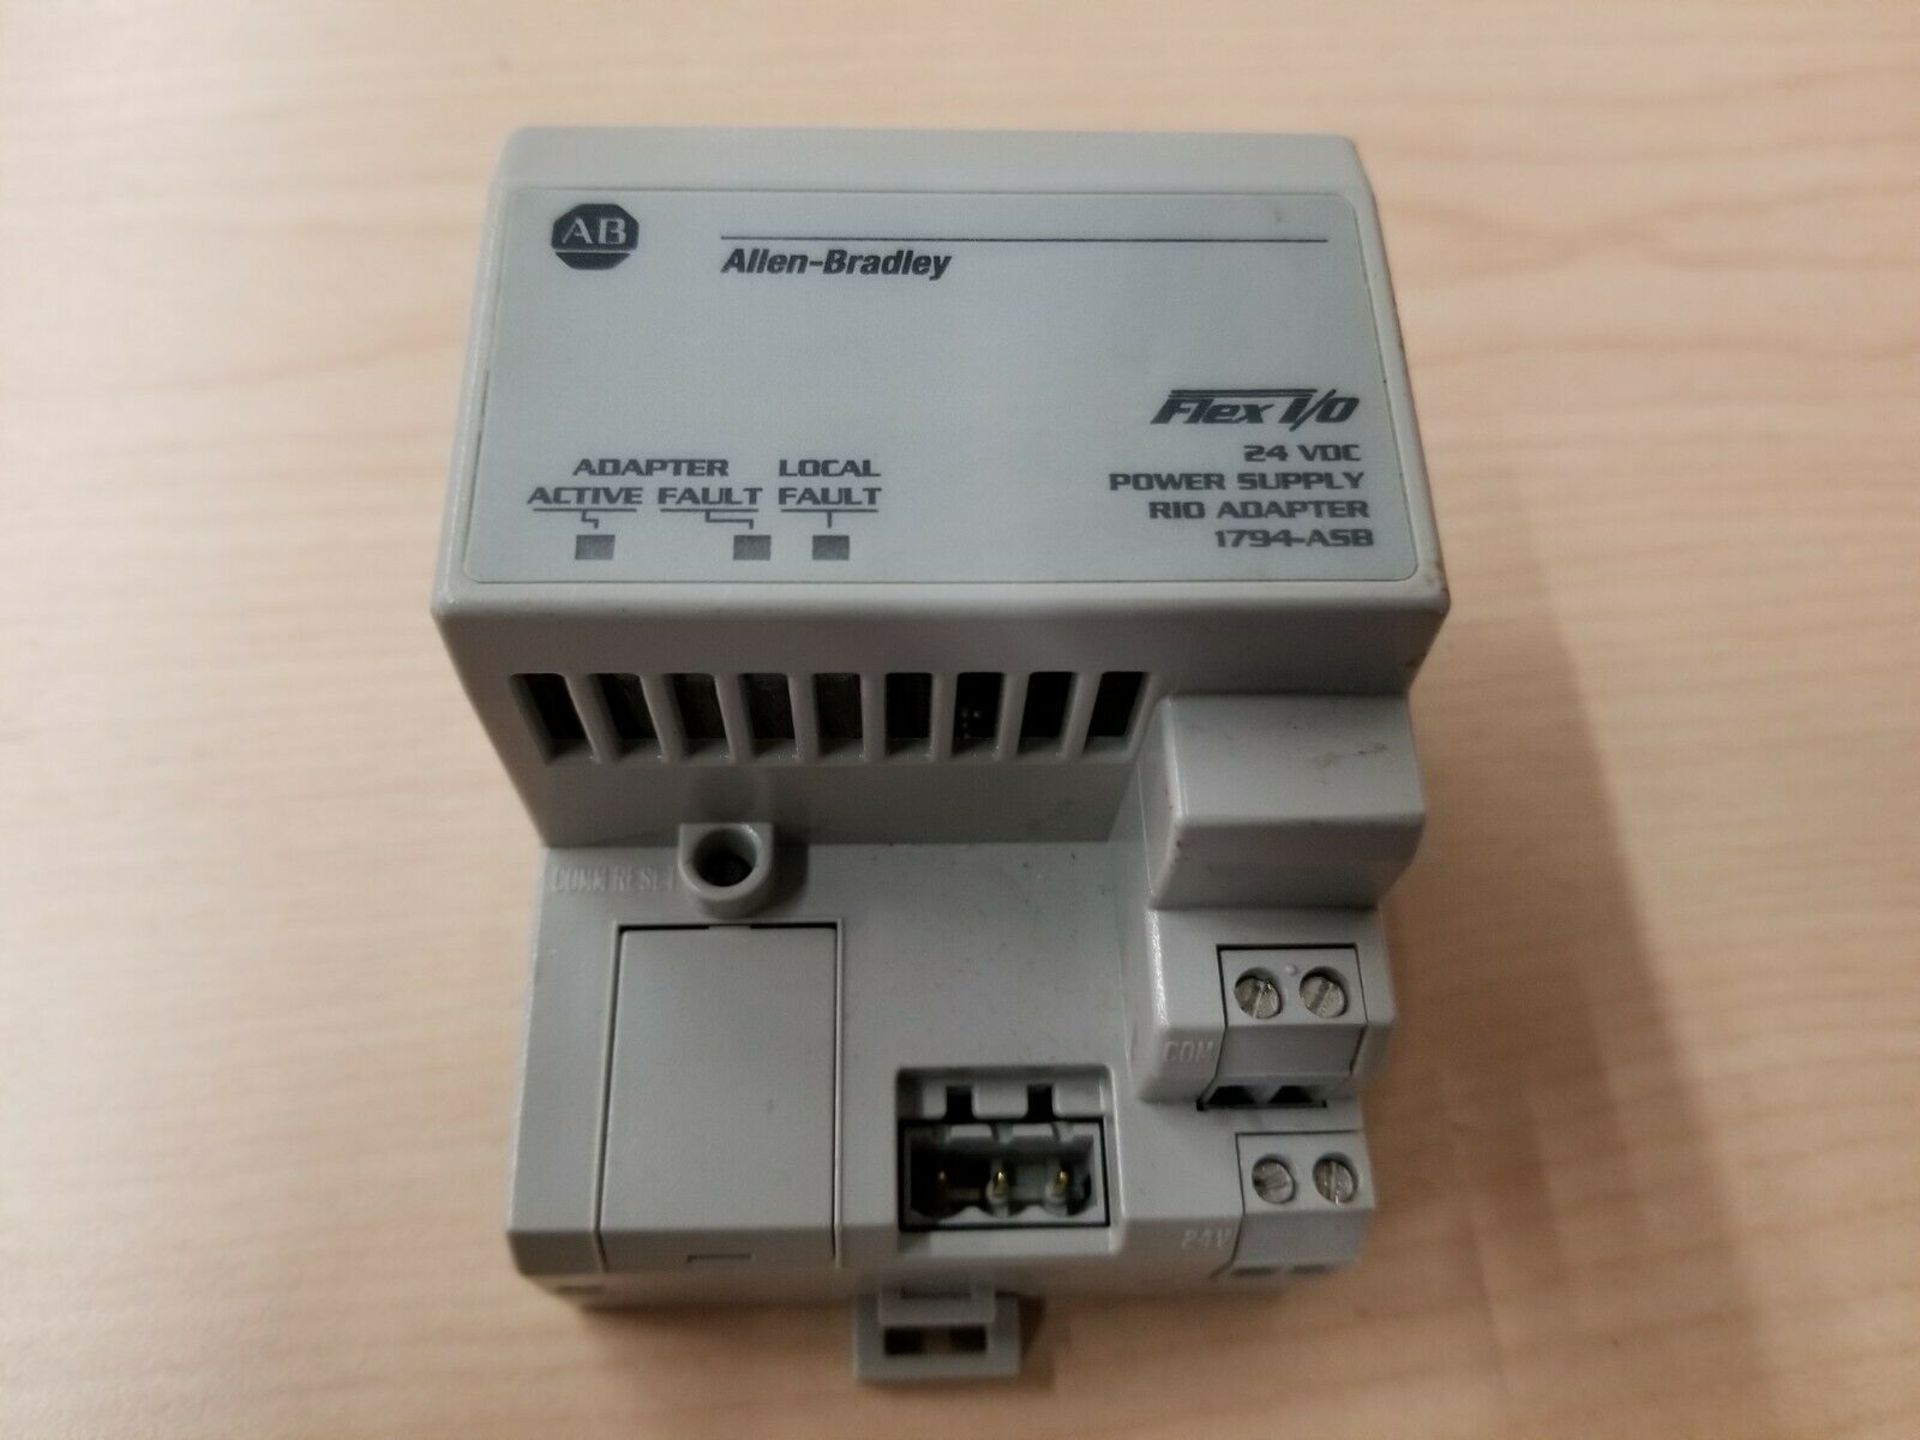 Allen Bradley Flex I/O 24VDC Power Supply RIO Adapter